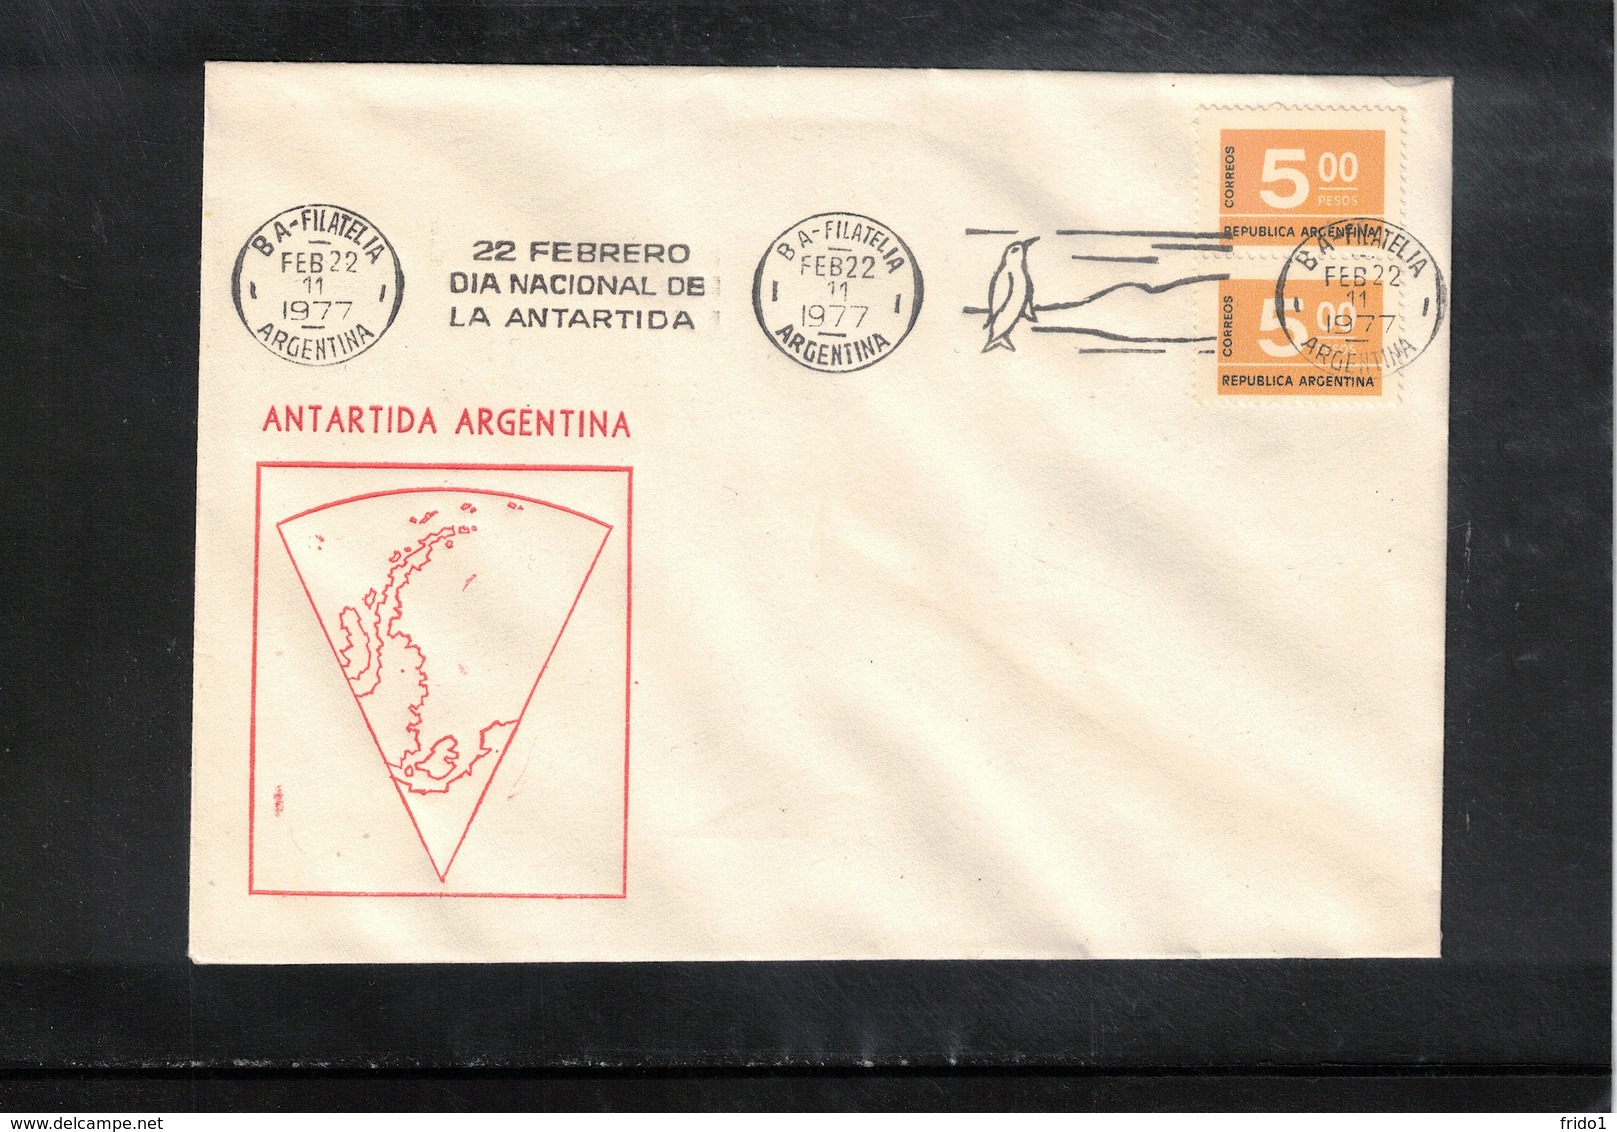 Argentina 1977 Argentinian Antarctica Interesting Cover - Événements & Commémorations